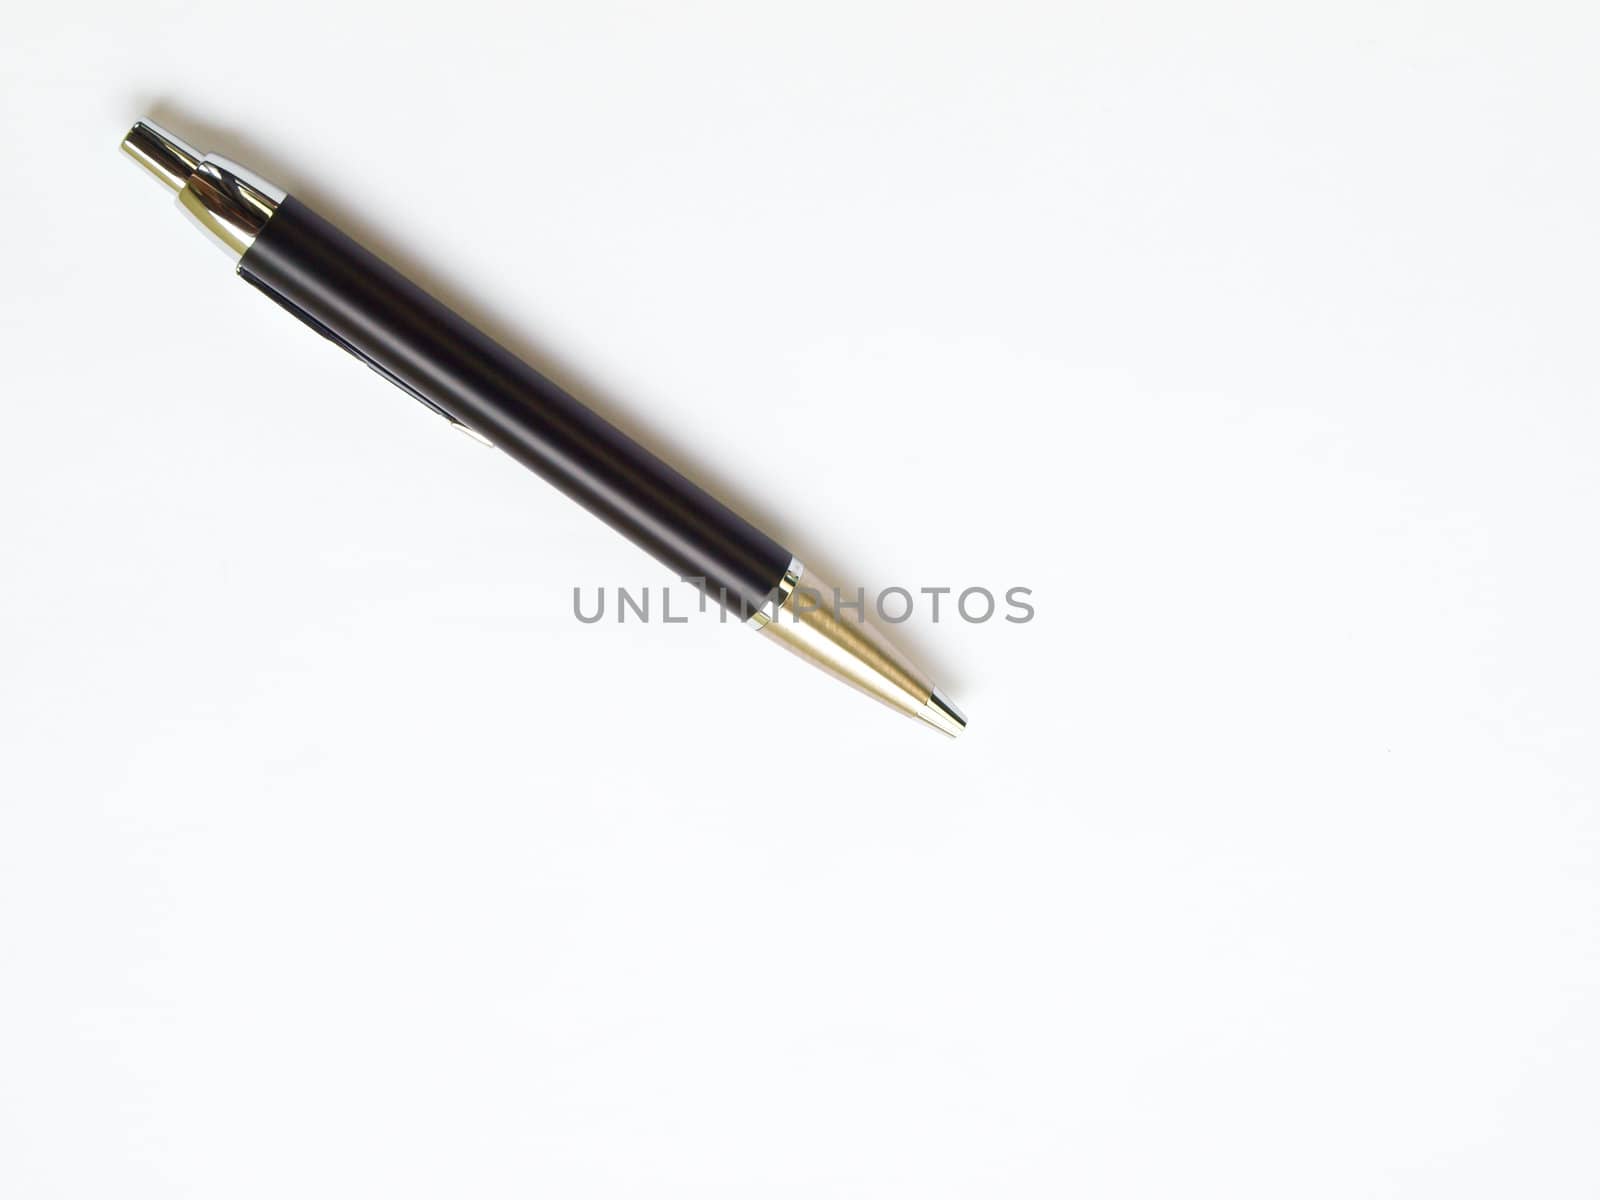 Black ball pen isolated on white background by gururugu